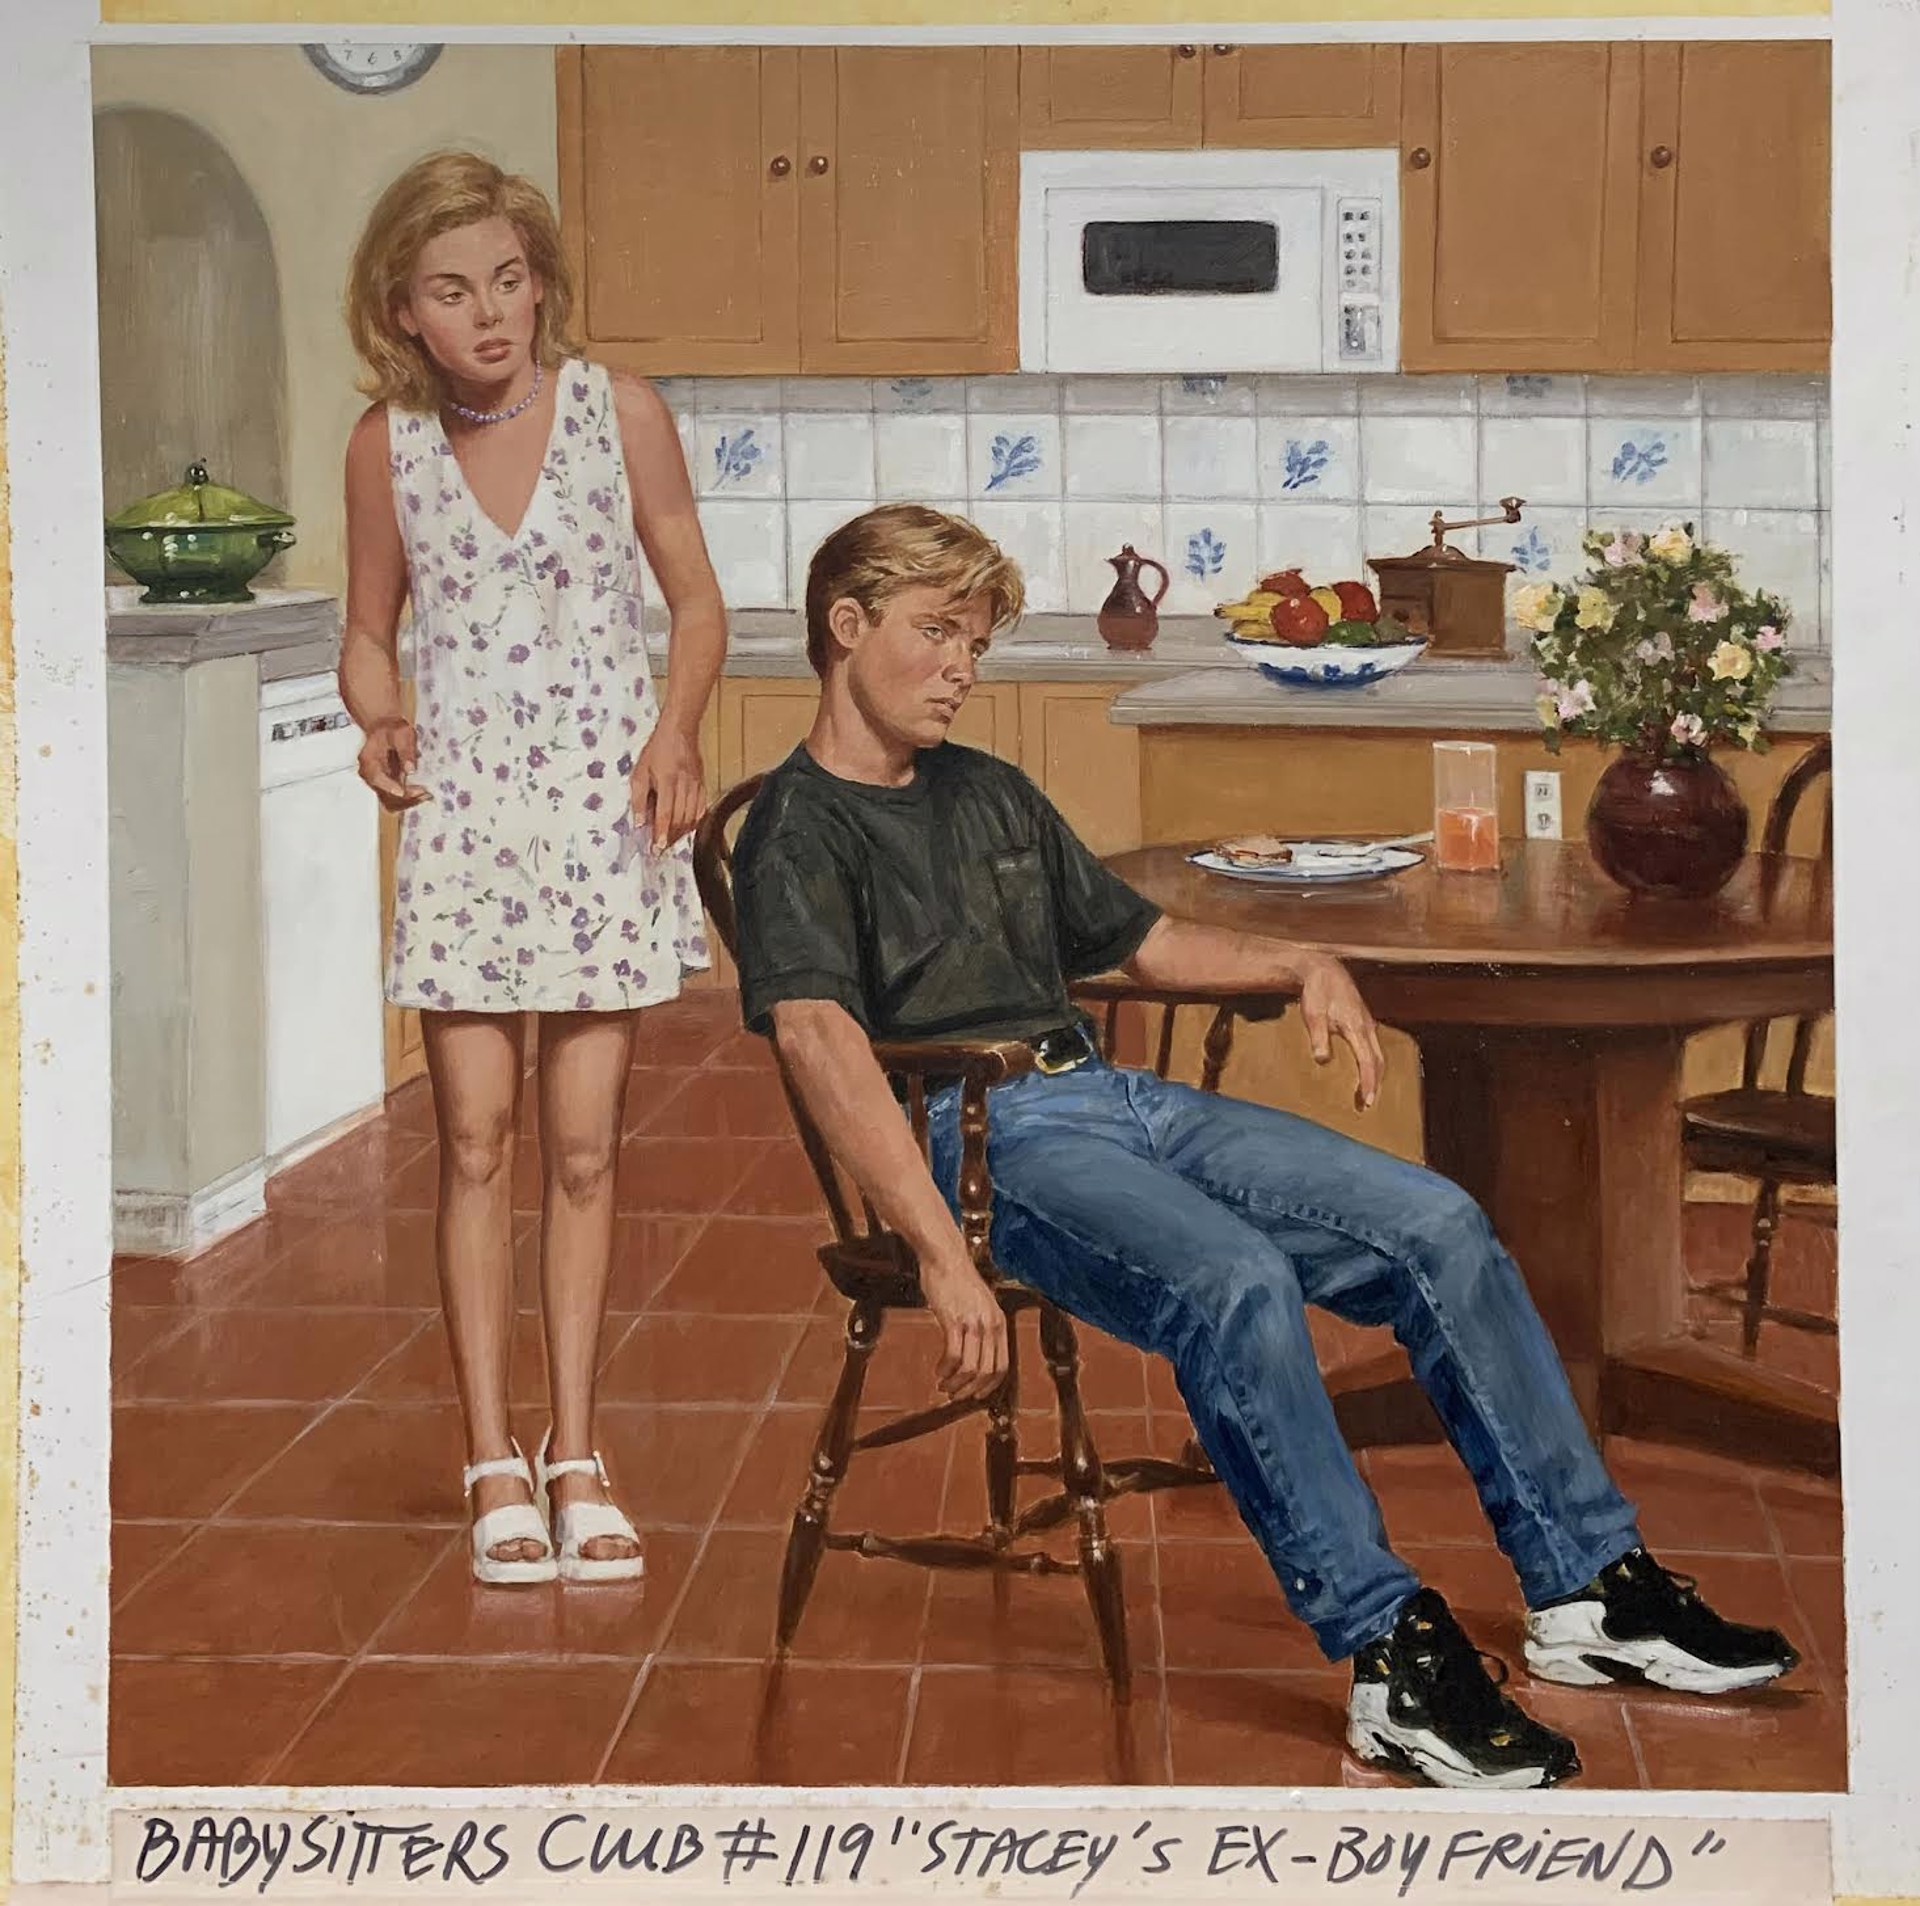 The Babysitter’s Club #119 “Stacey’s Ex-Boyfriend” by Hodges Soileau